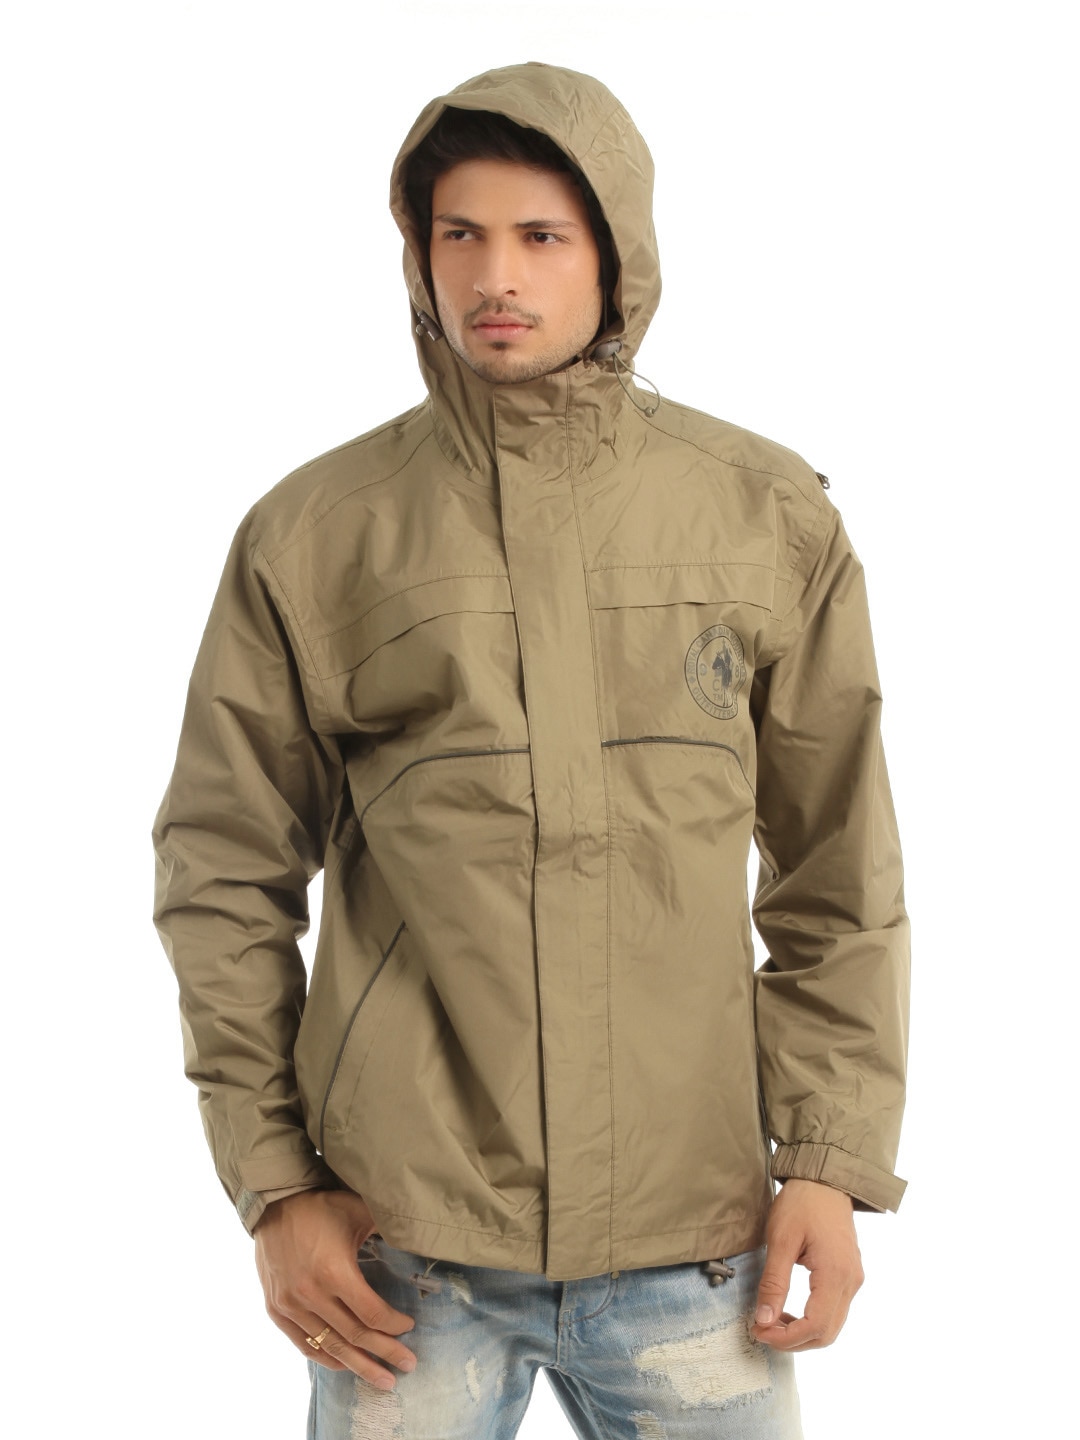 Just Natural Unisex Brown Rain Jacket